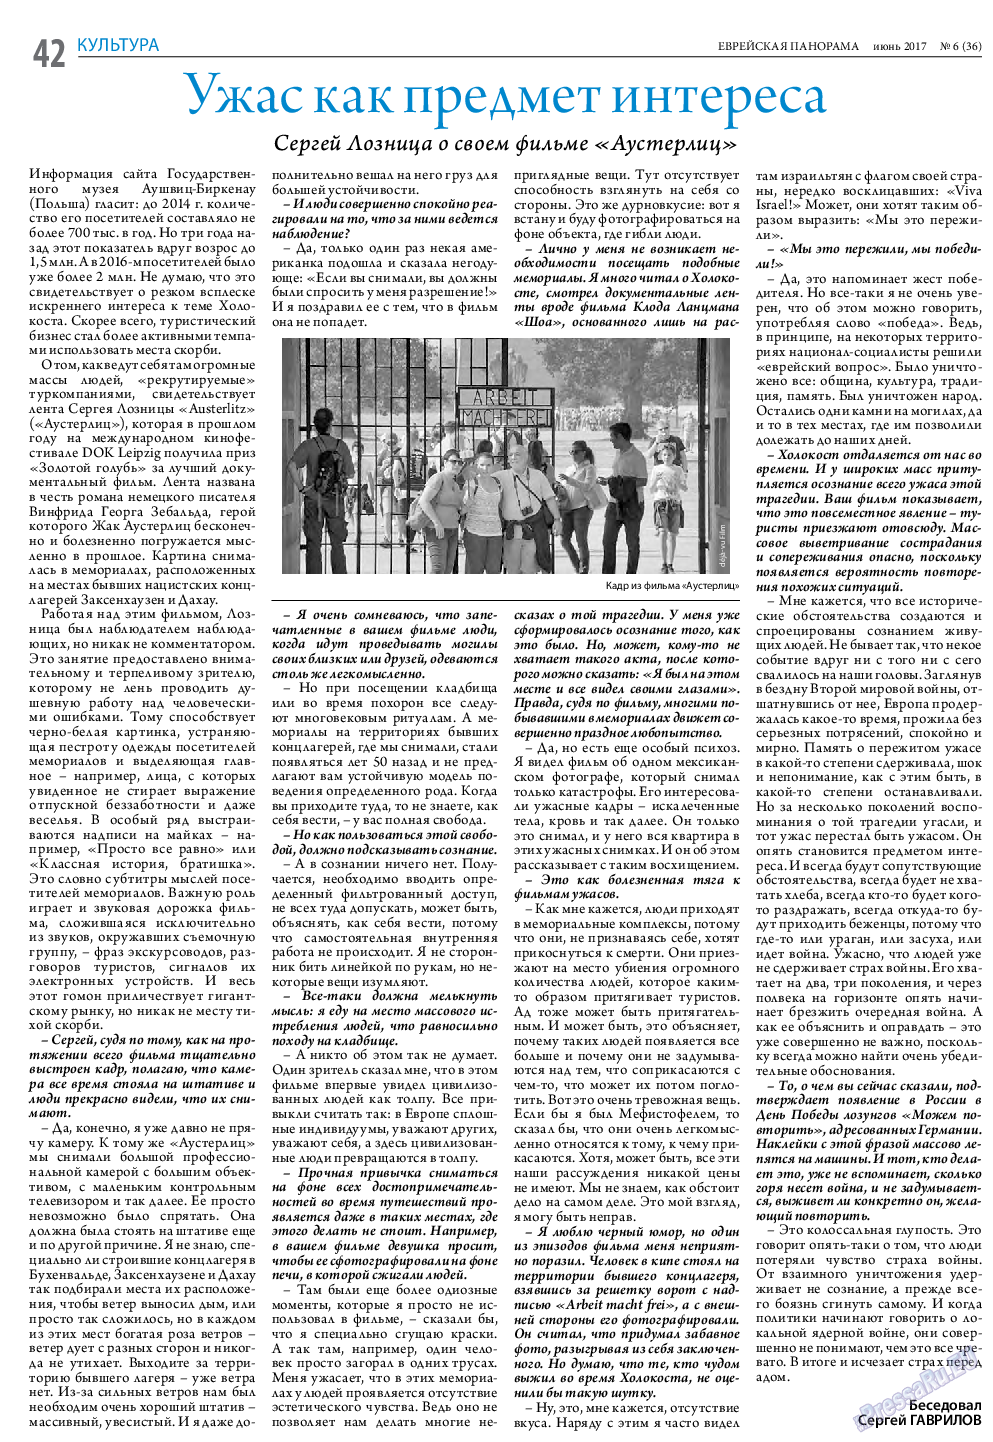 Еврейская панорама, газета. 2017 №6 стр.42